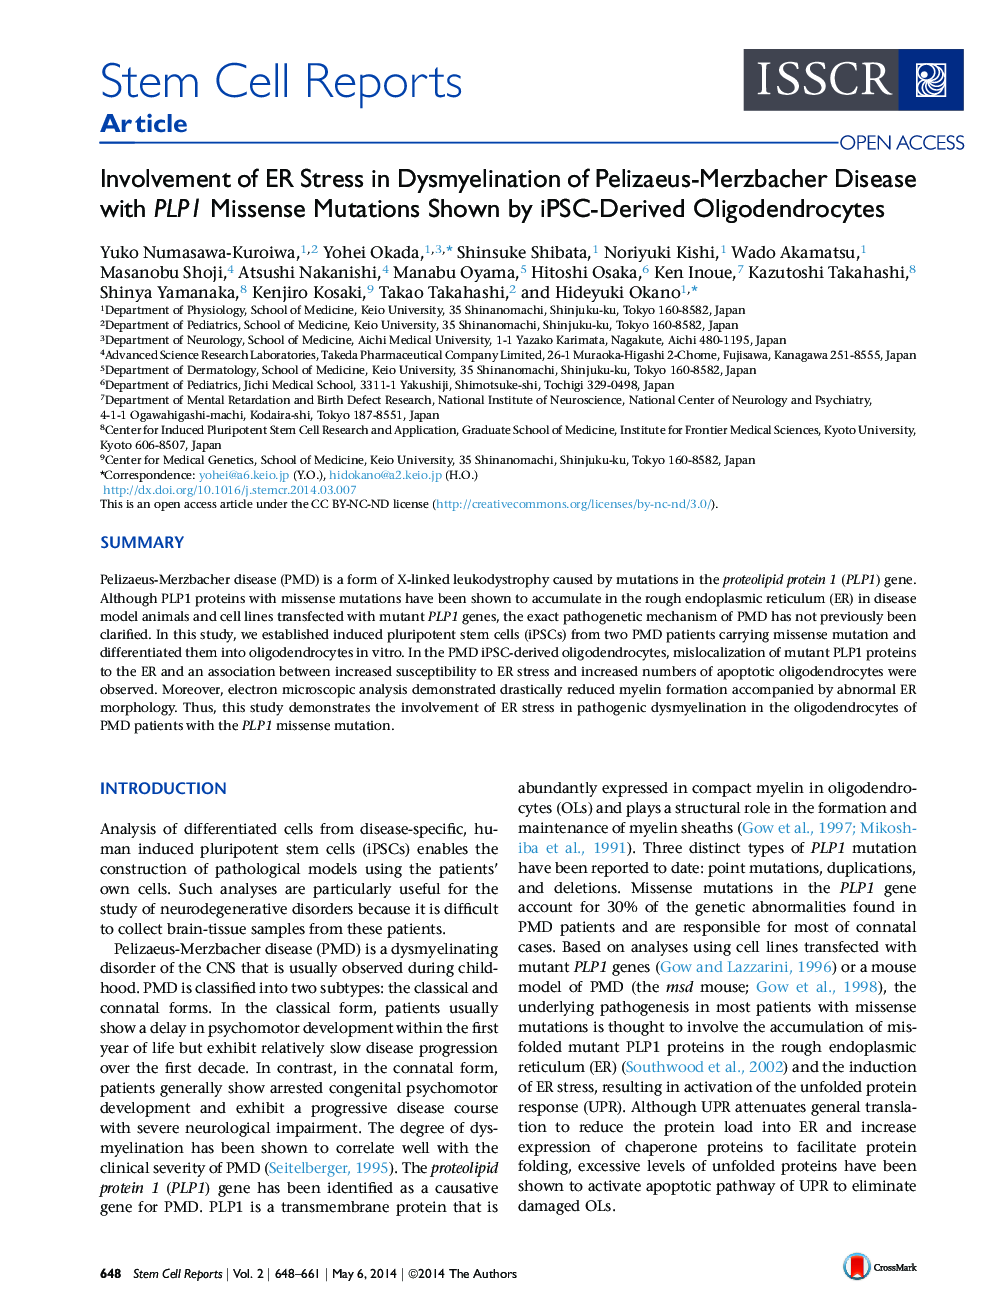 Involvement of ER Stress in Dysmyelination of Pelizaeus-Merzbacher Disease with PLP1 Missense Mutations Shown by iPSC-Derived Oligodendrocytes 